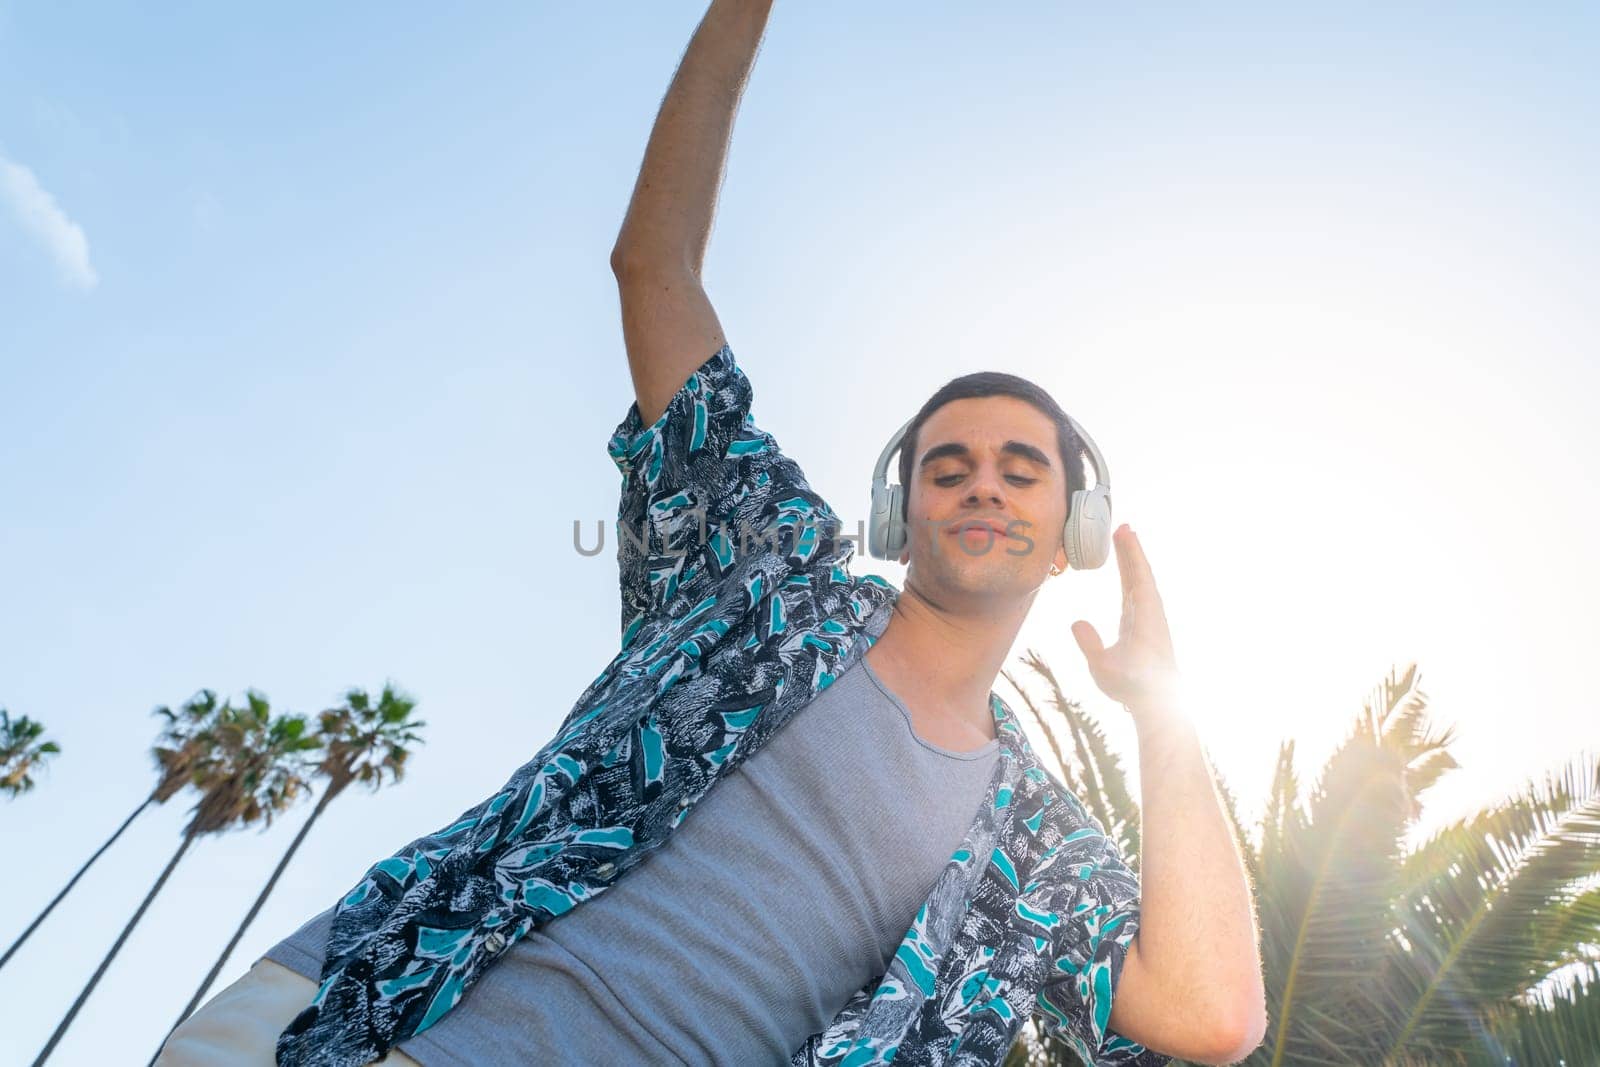 Trendy young male in headphones dancing enjoying music outdoor on summer resort. by PaulCarr